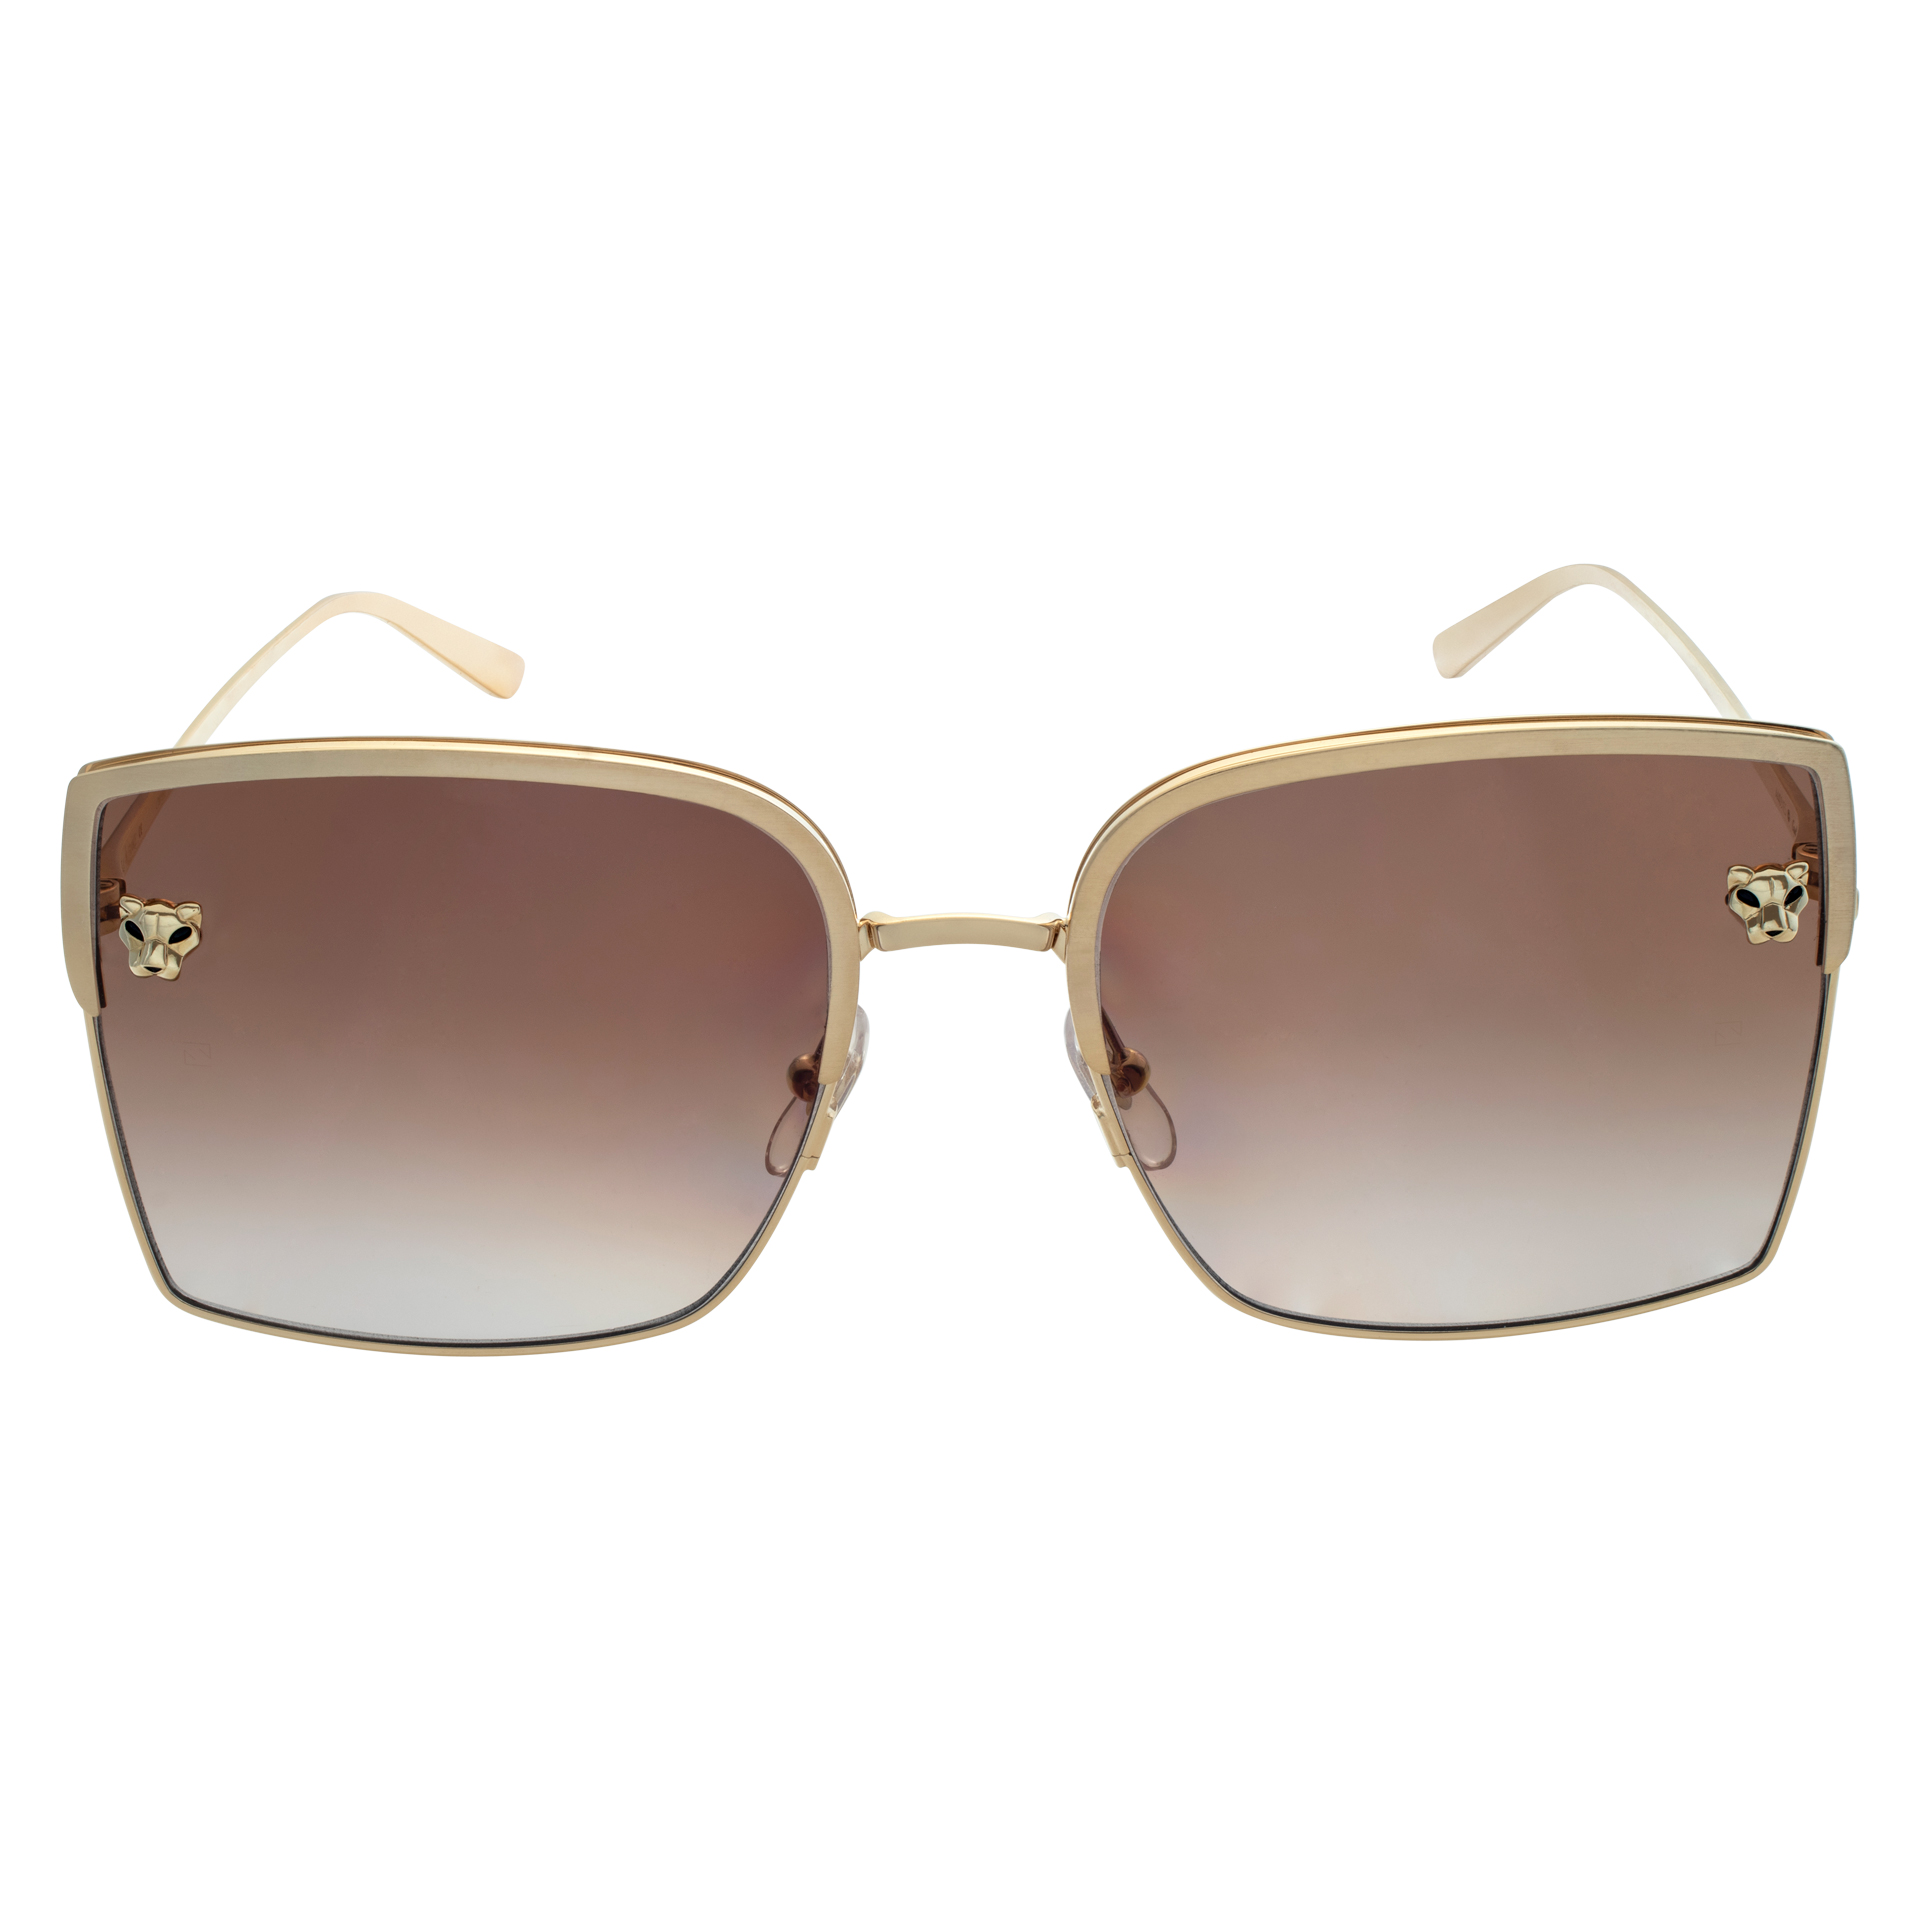 Cartier Gold Square Sunglasses image 1